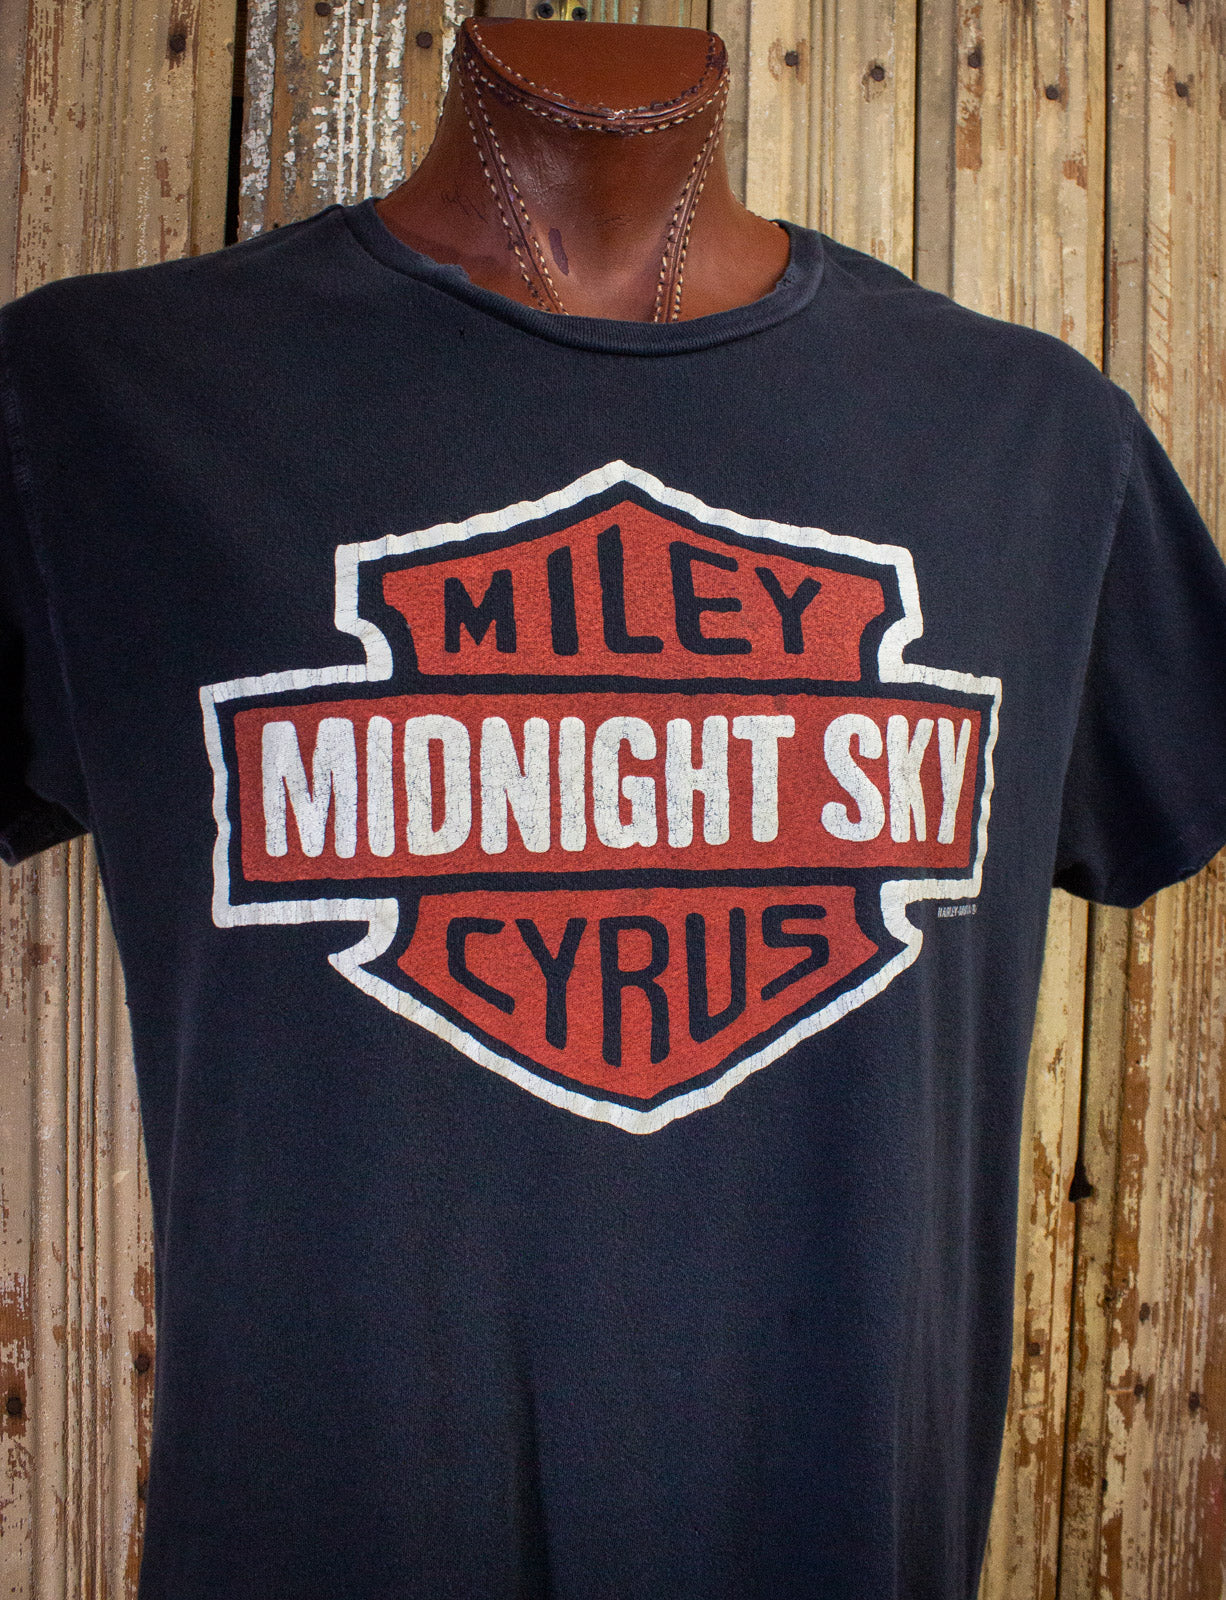 Miley Cyrus Midnight Sky Made Worn Harley Davidson T Shirt 2020 Black XL